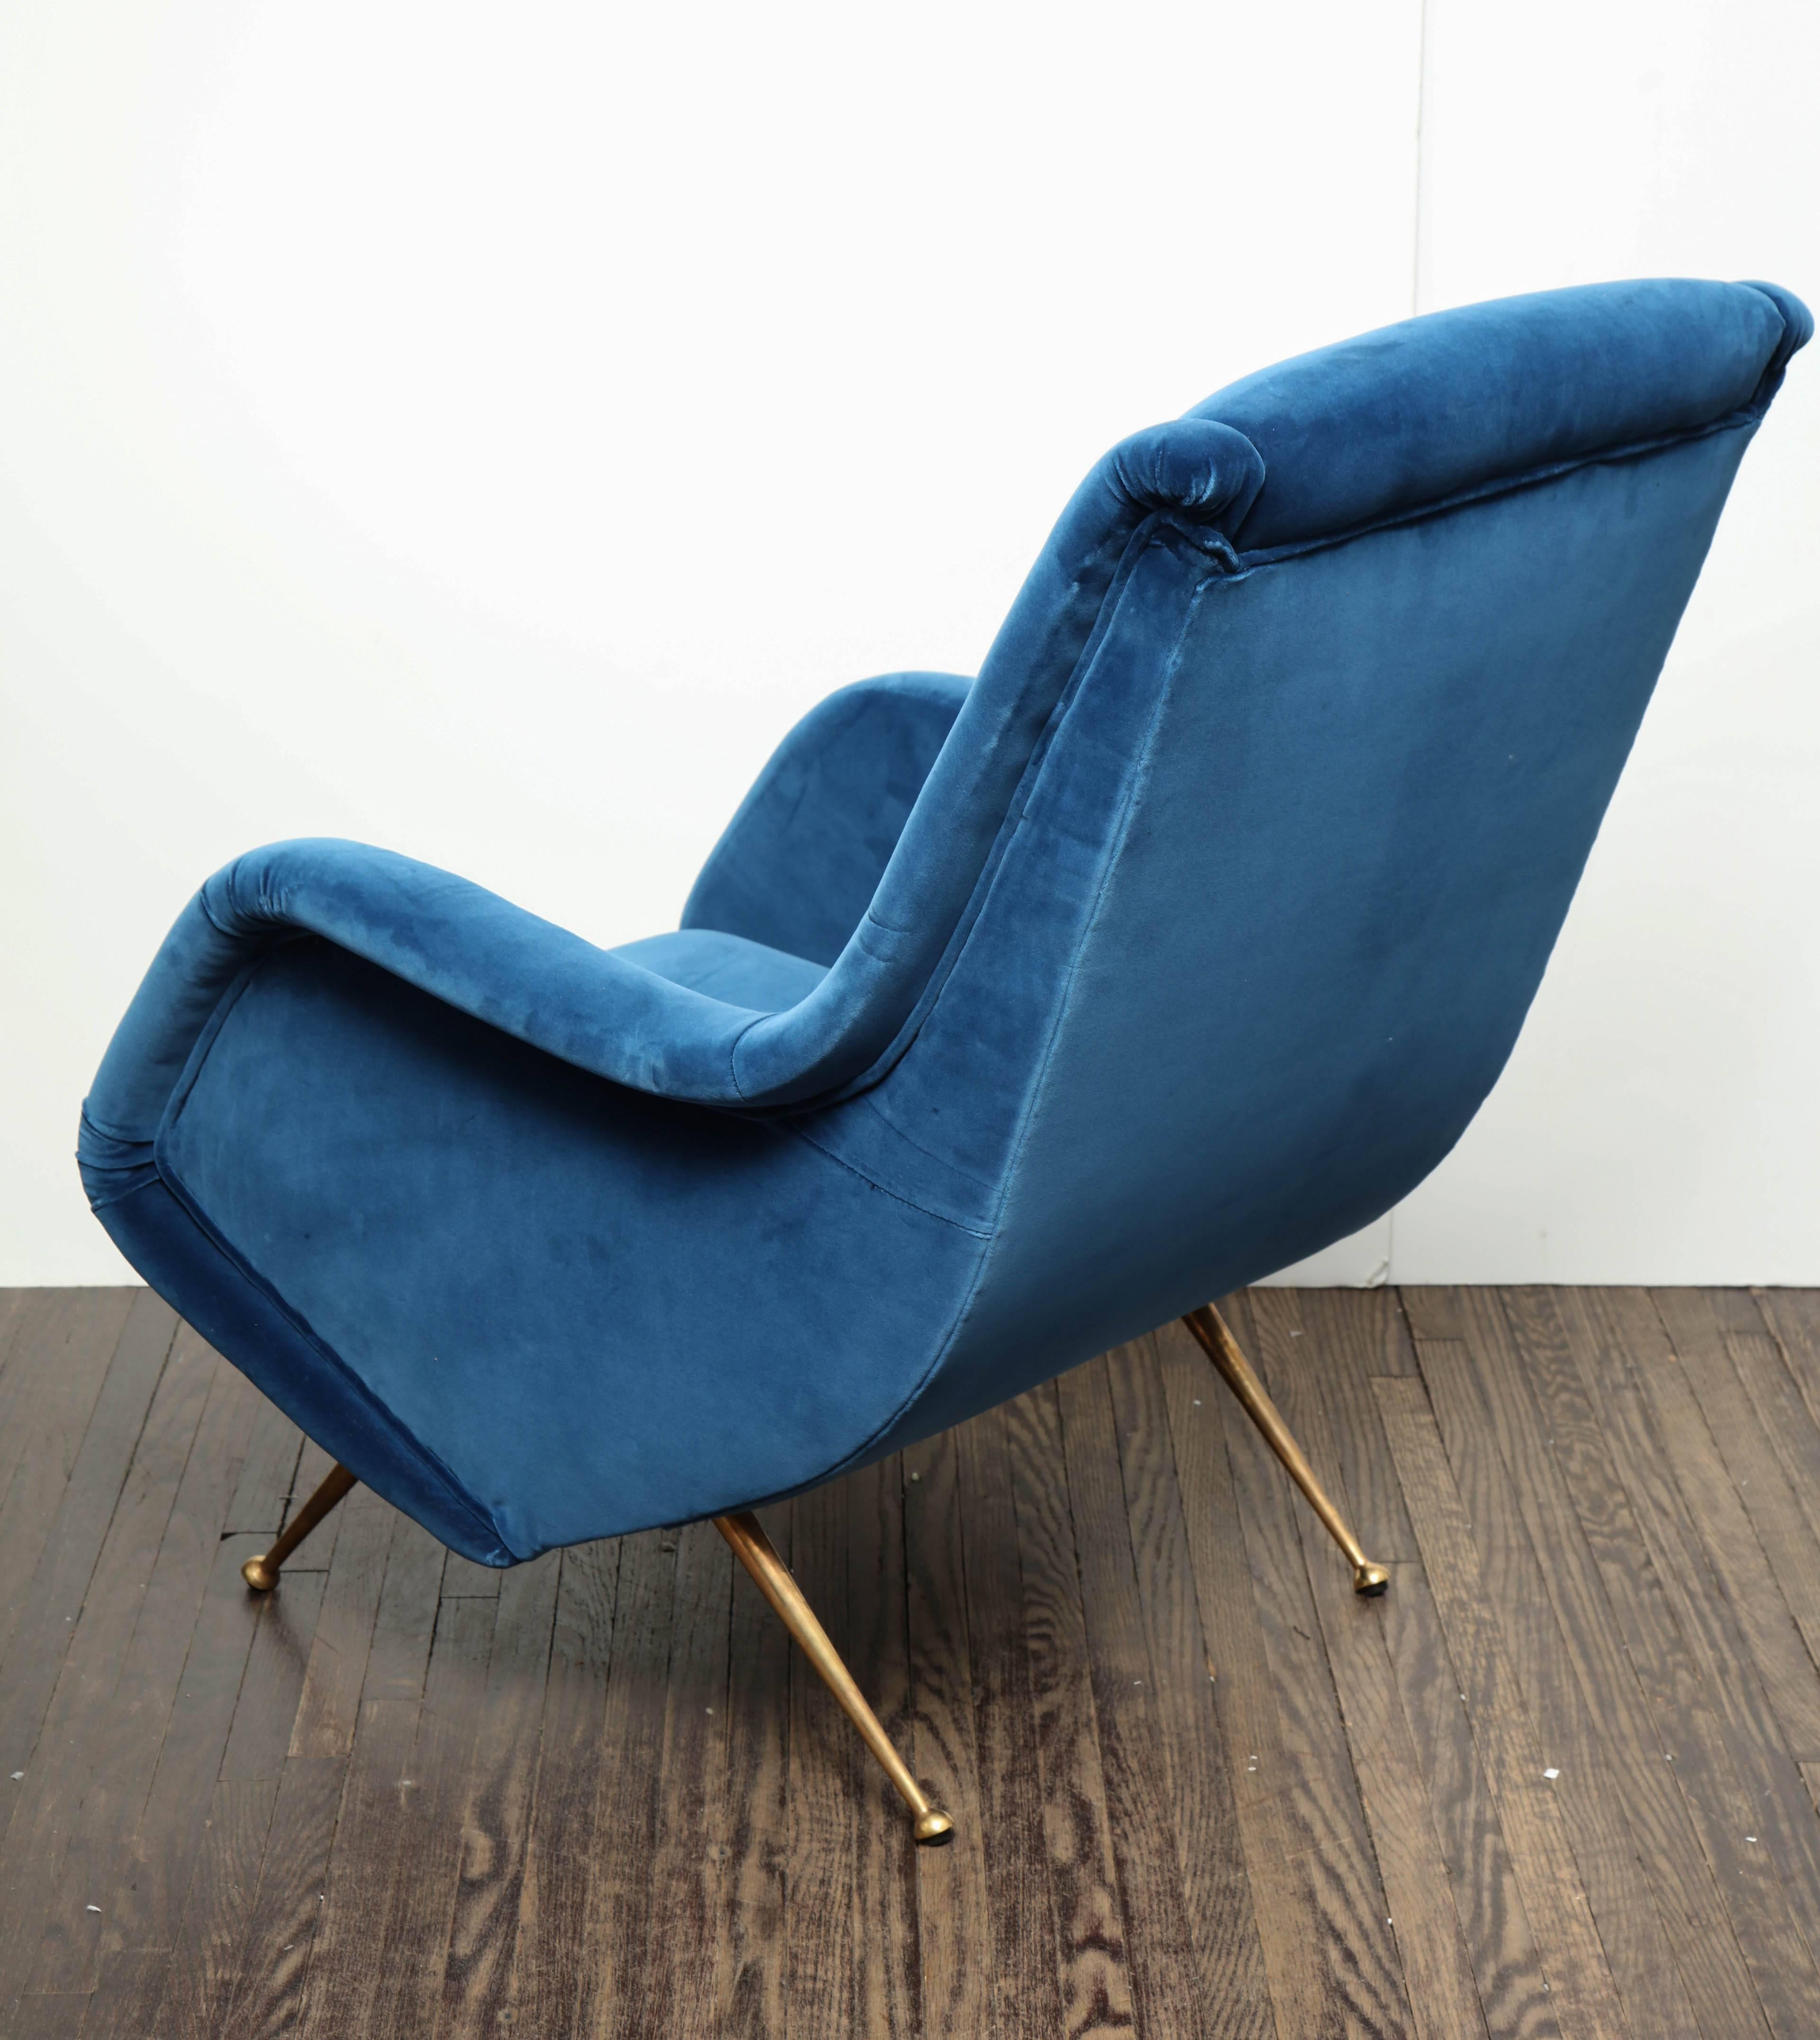 Pair of Parisi Vintage Italian Club Chairs Upholstered in Teal Blue Velvet 3